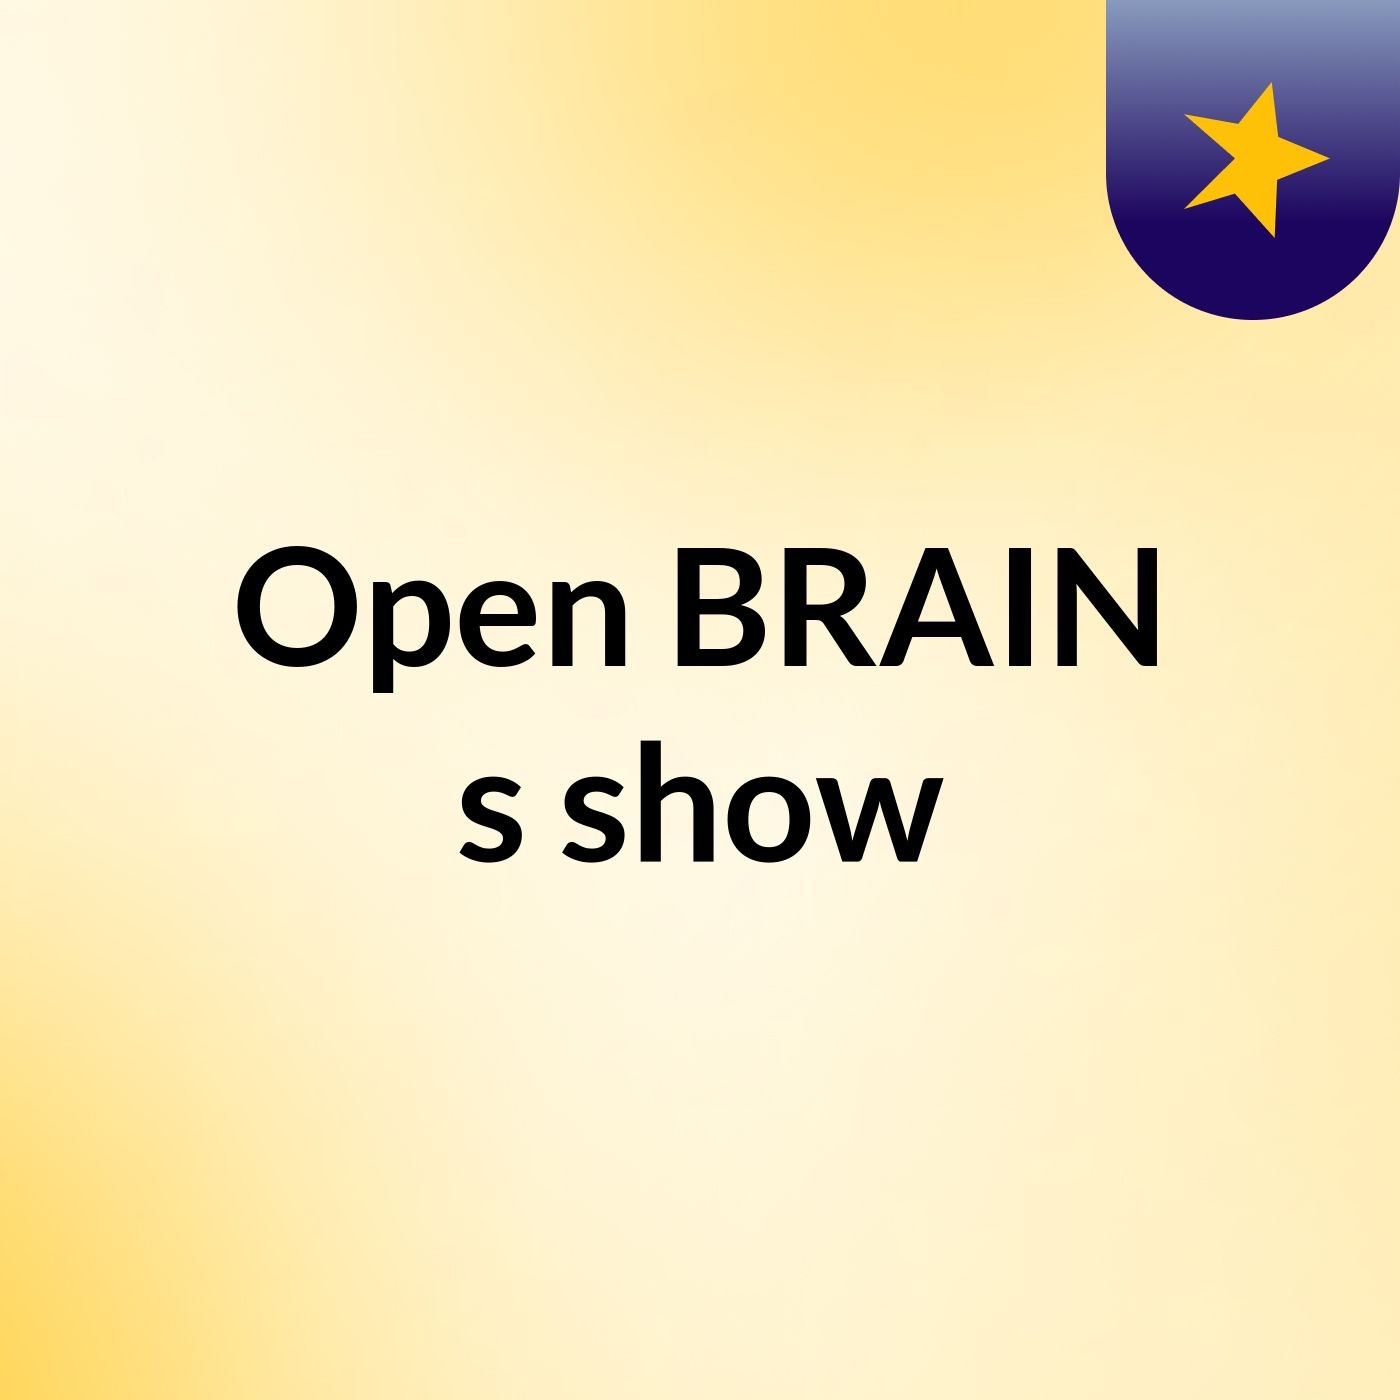 Open BRAIN's show